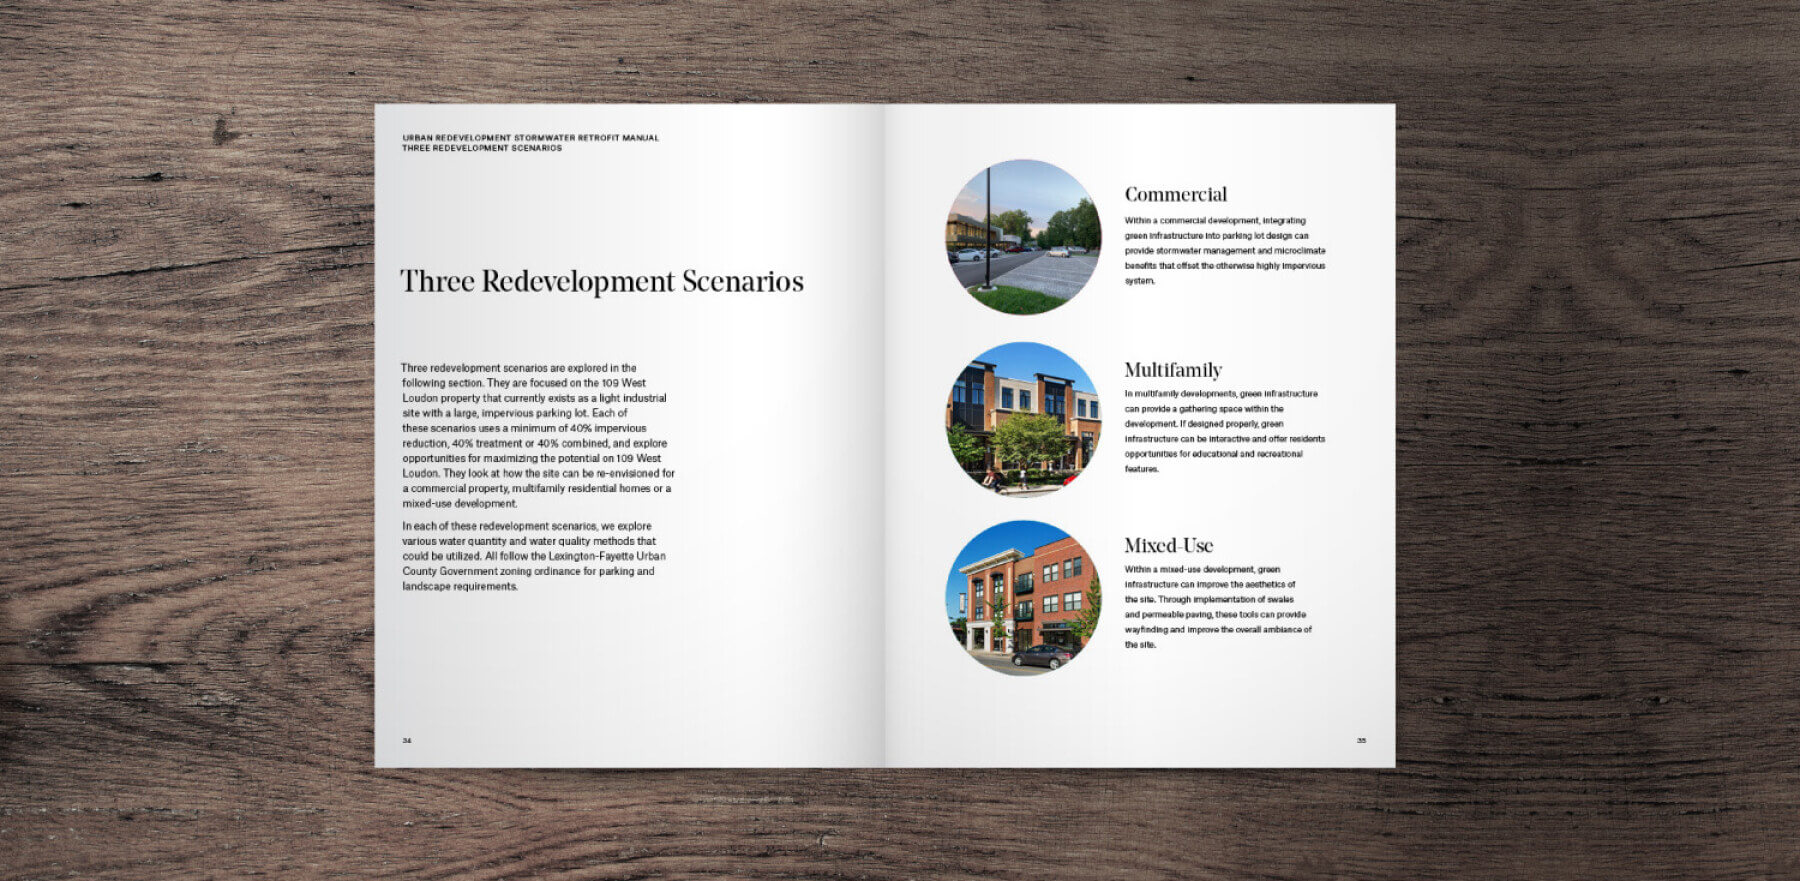 A spread in the Urban Redevelopment Stormwater Retrofit Manual showing three scenarios